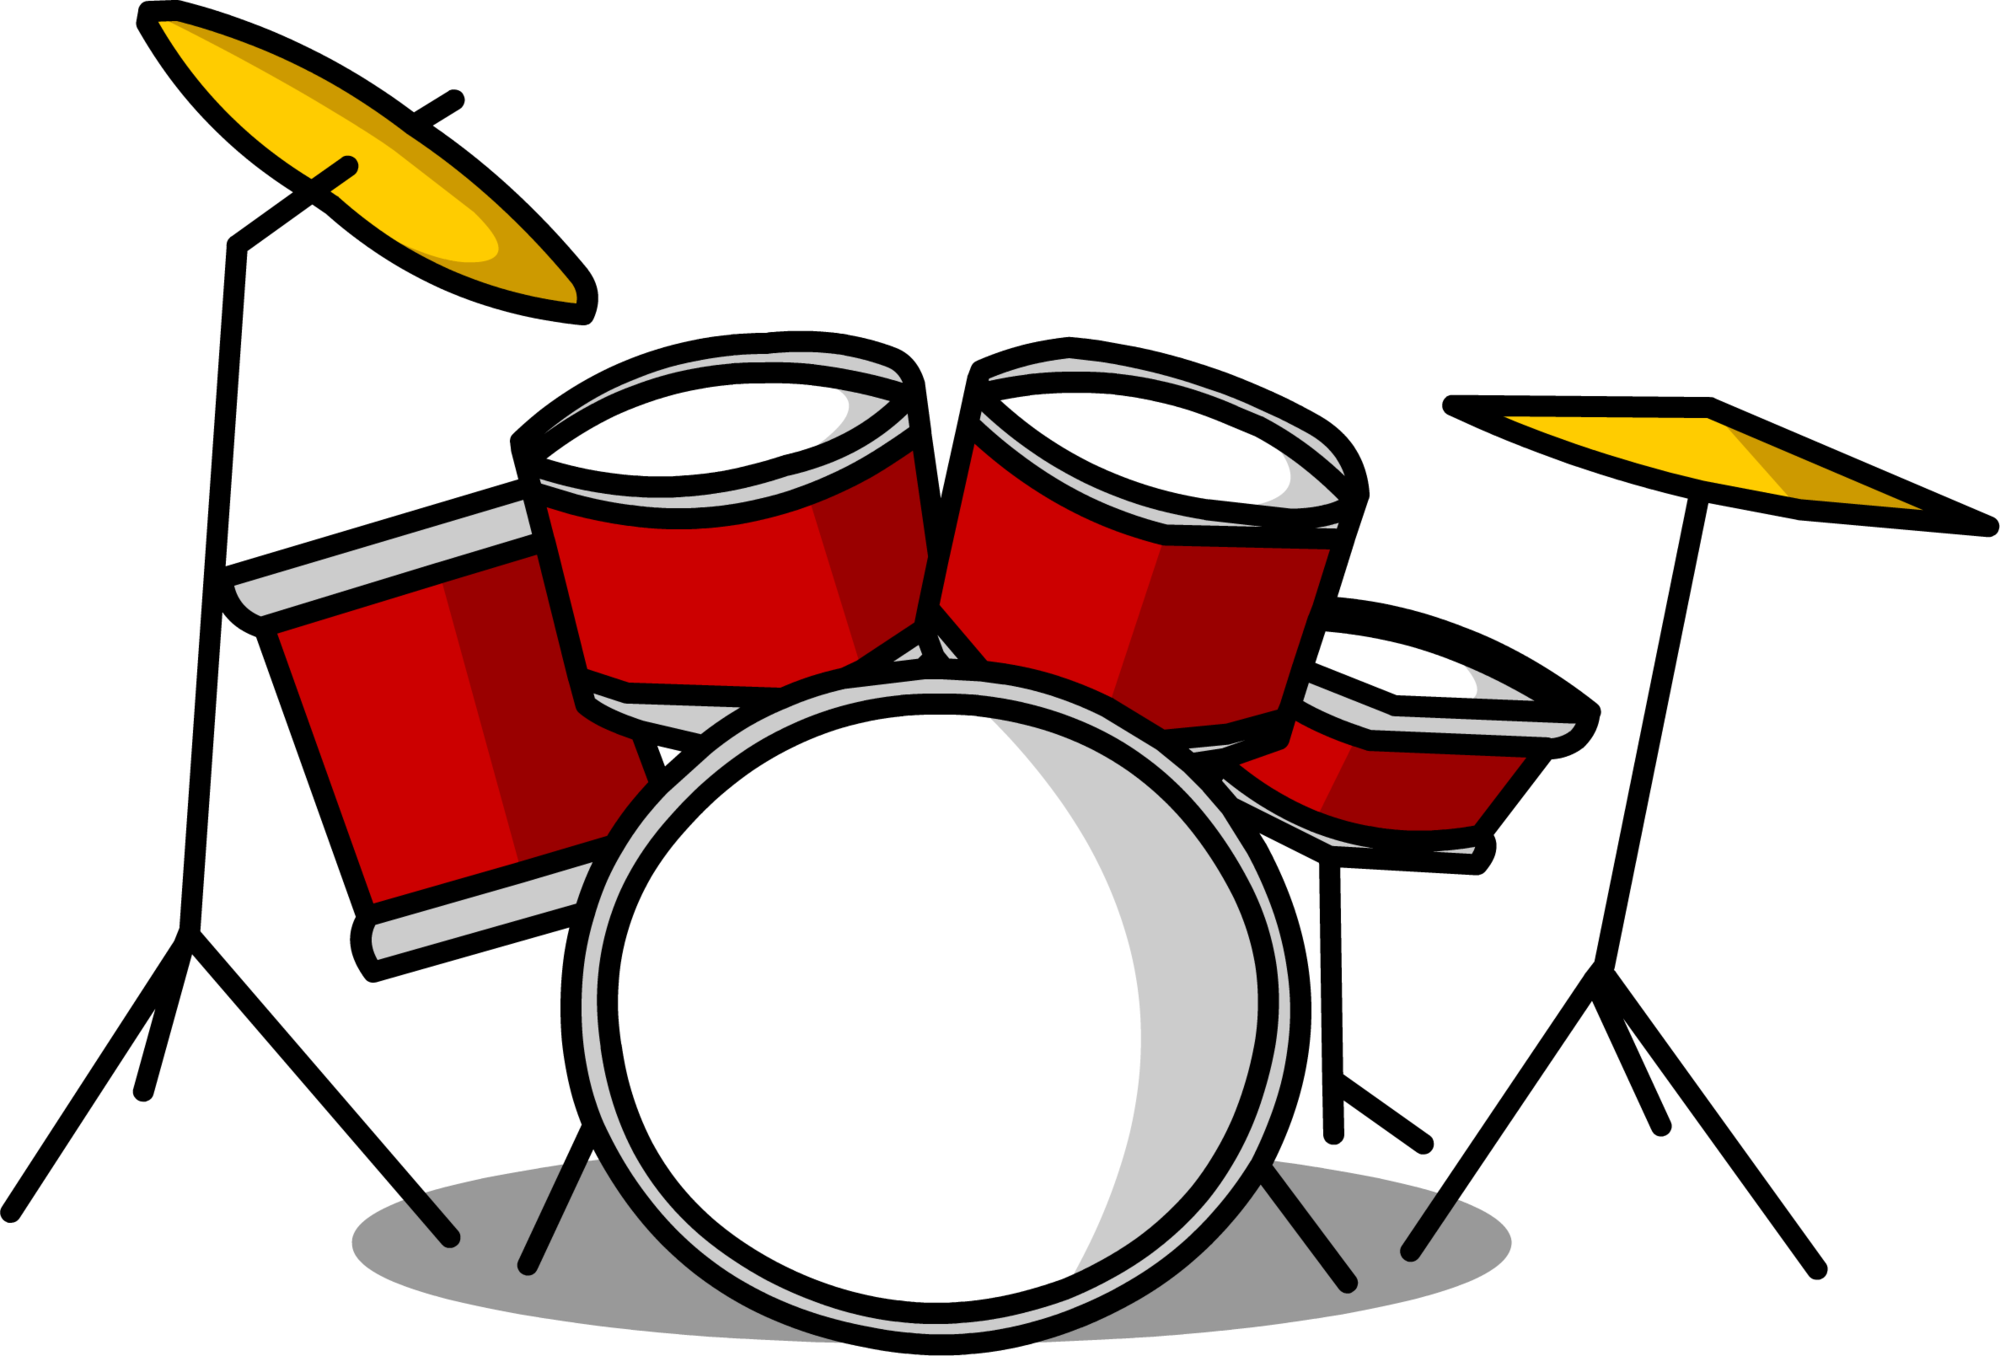 A Cartoon Of A Drum Set